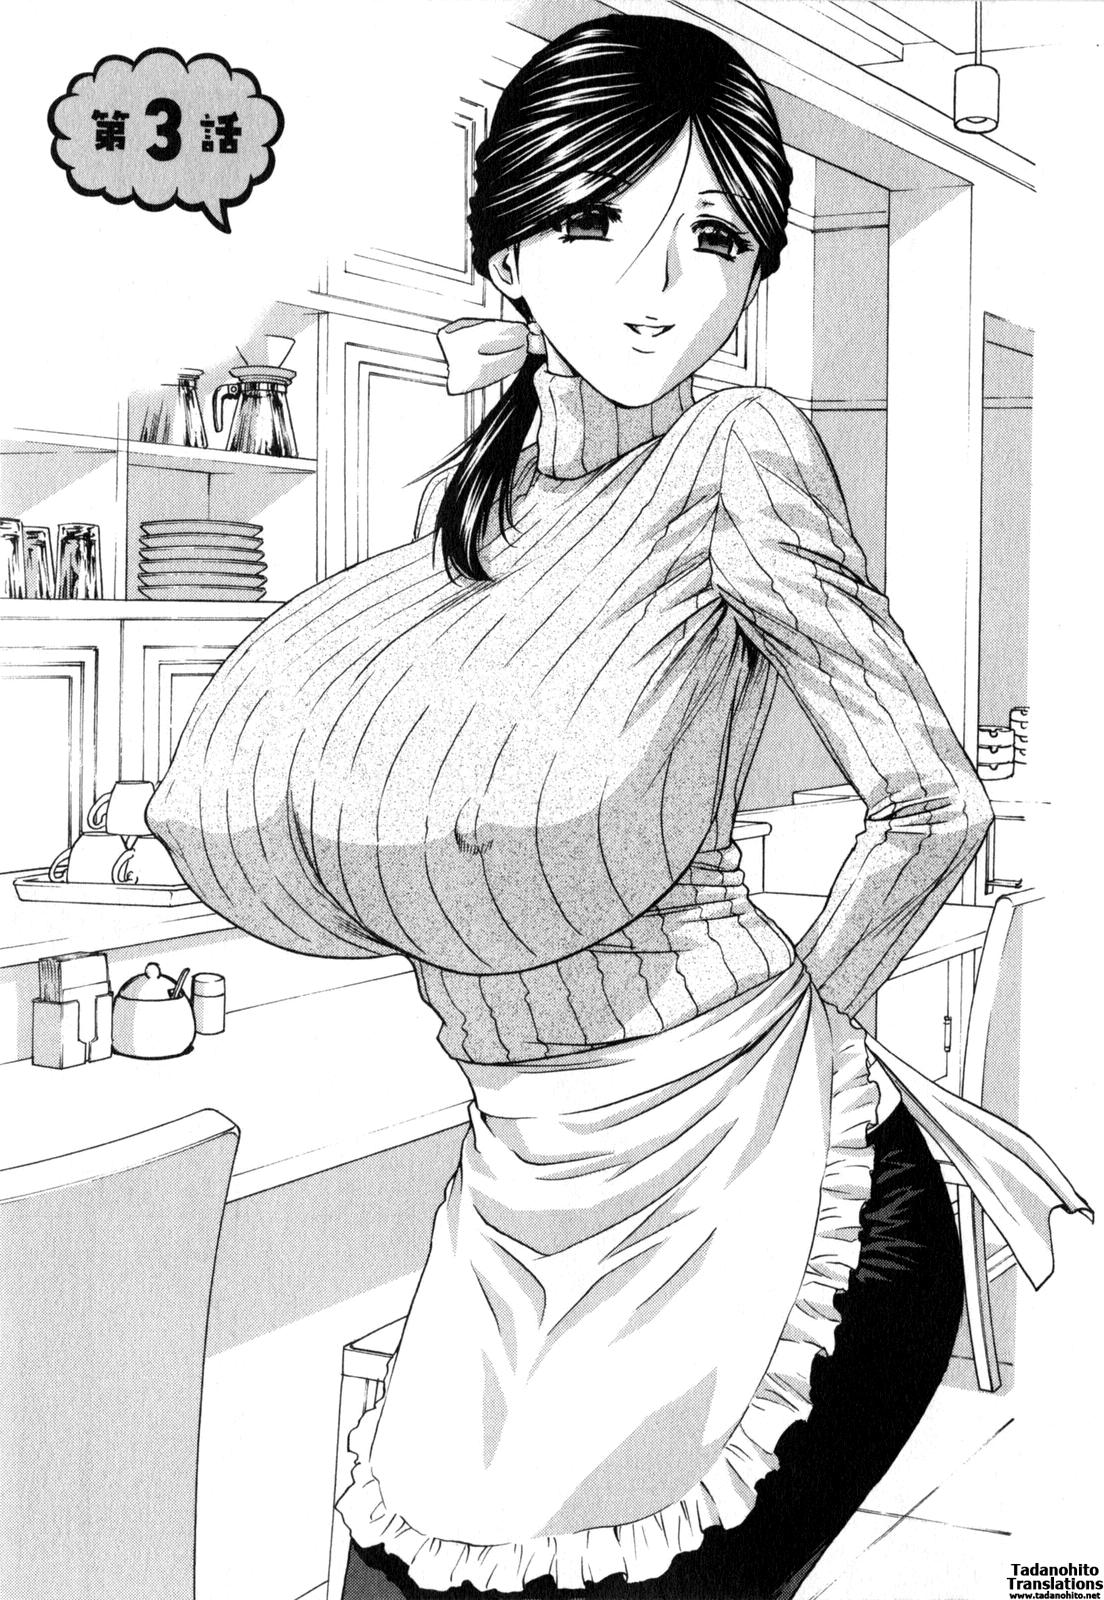 [Hidemaru] Life with Married Women Just Like a Manga 2 - Ch. 1-4 [English] {Tadanohito} 46